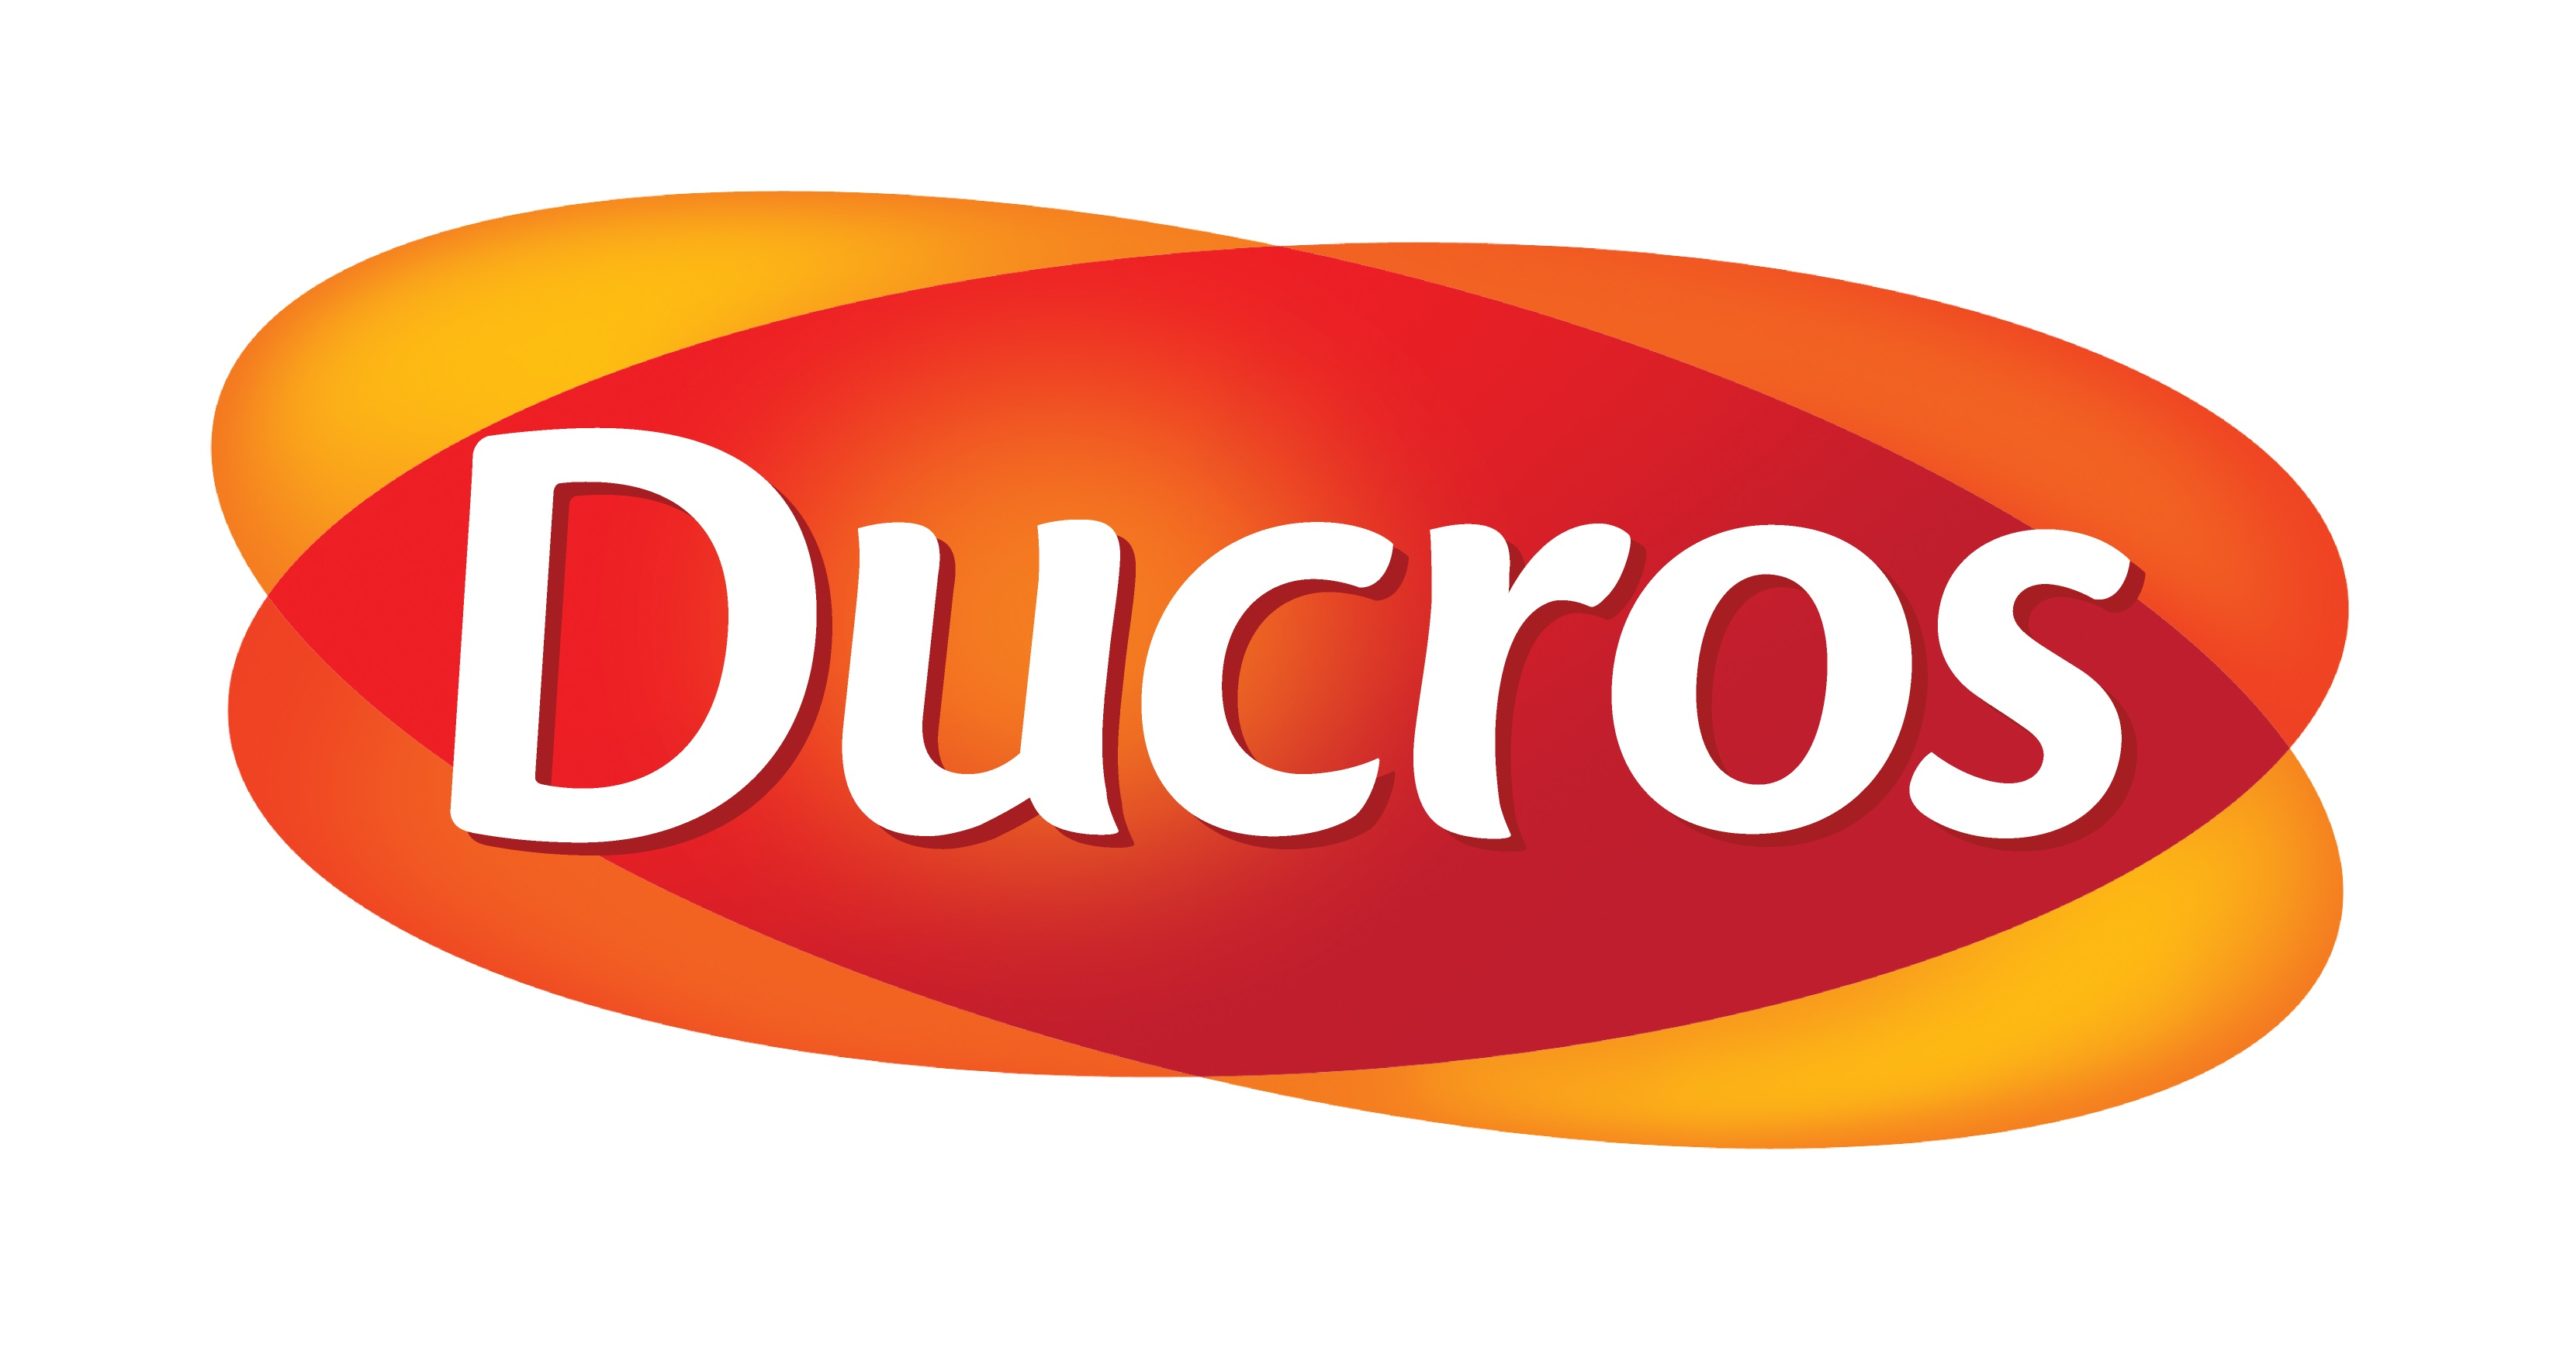 Brand logo Ducros